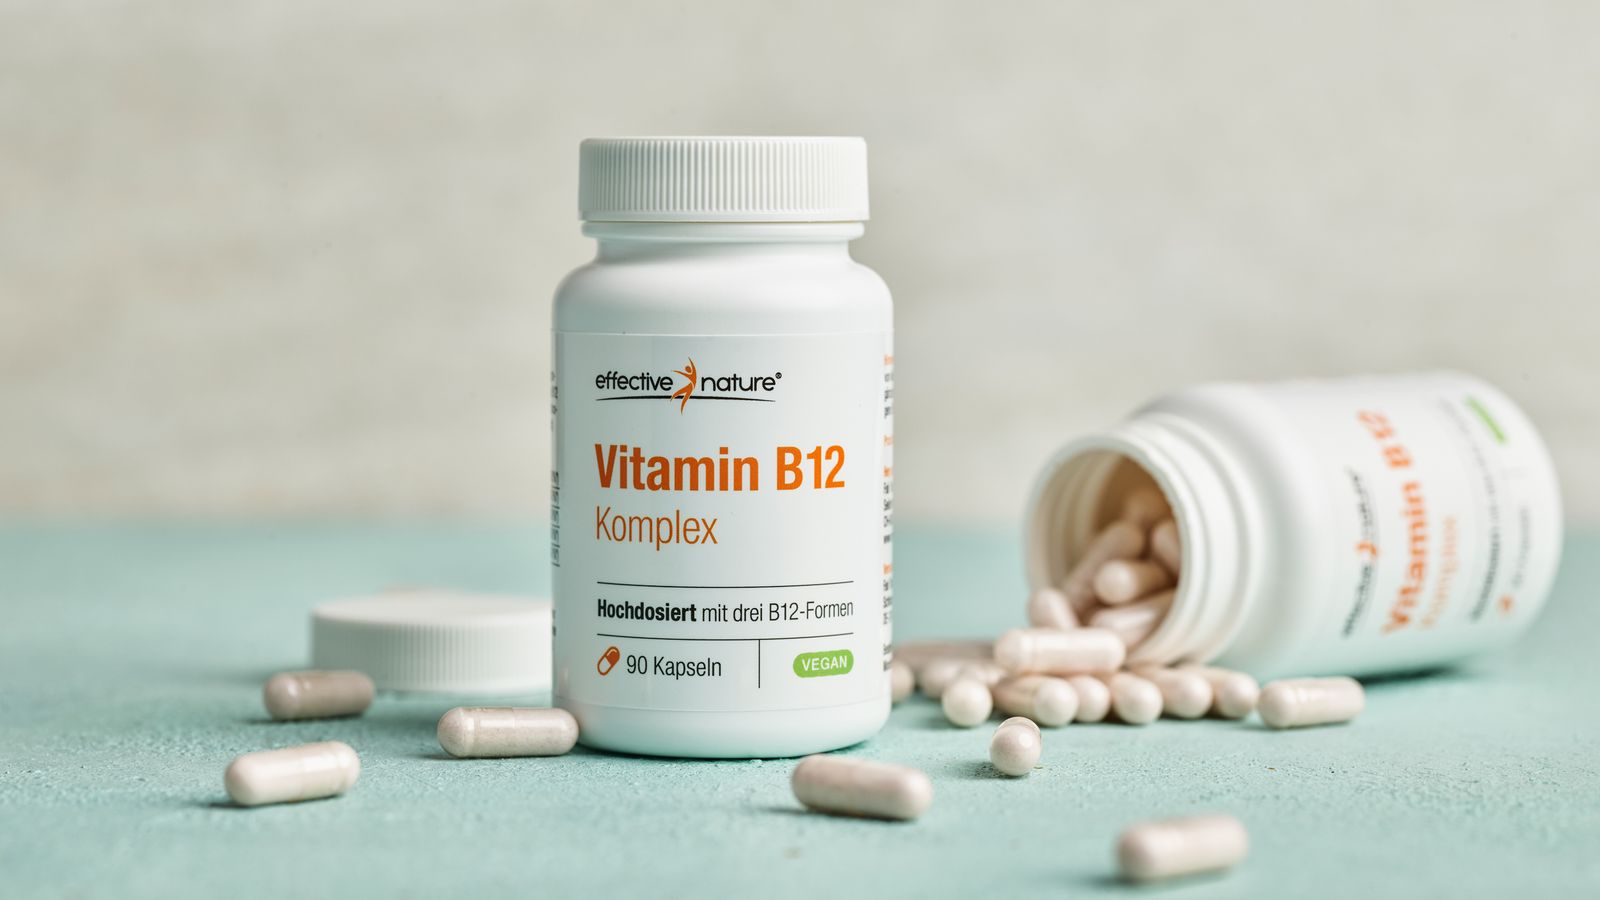 Algen vitamin b12 - Der absolute TOP-Favorit 